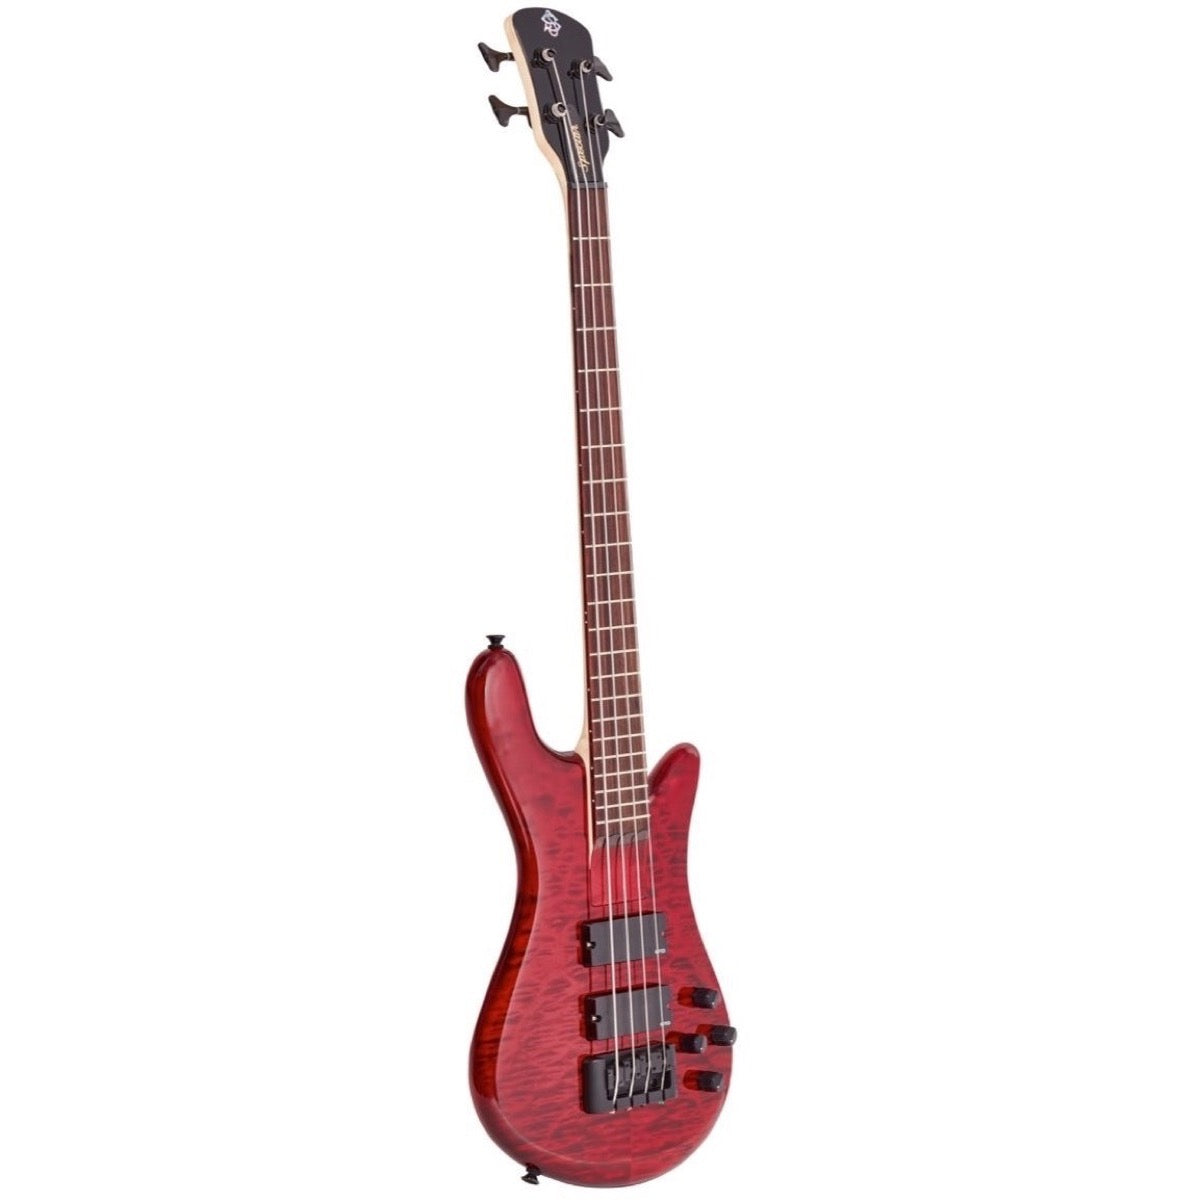 Spector Bantam 4 Short Scale Bass, Black Cherry Gloss